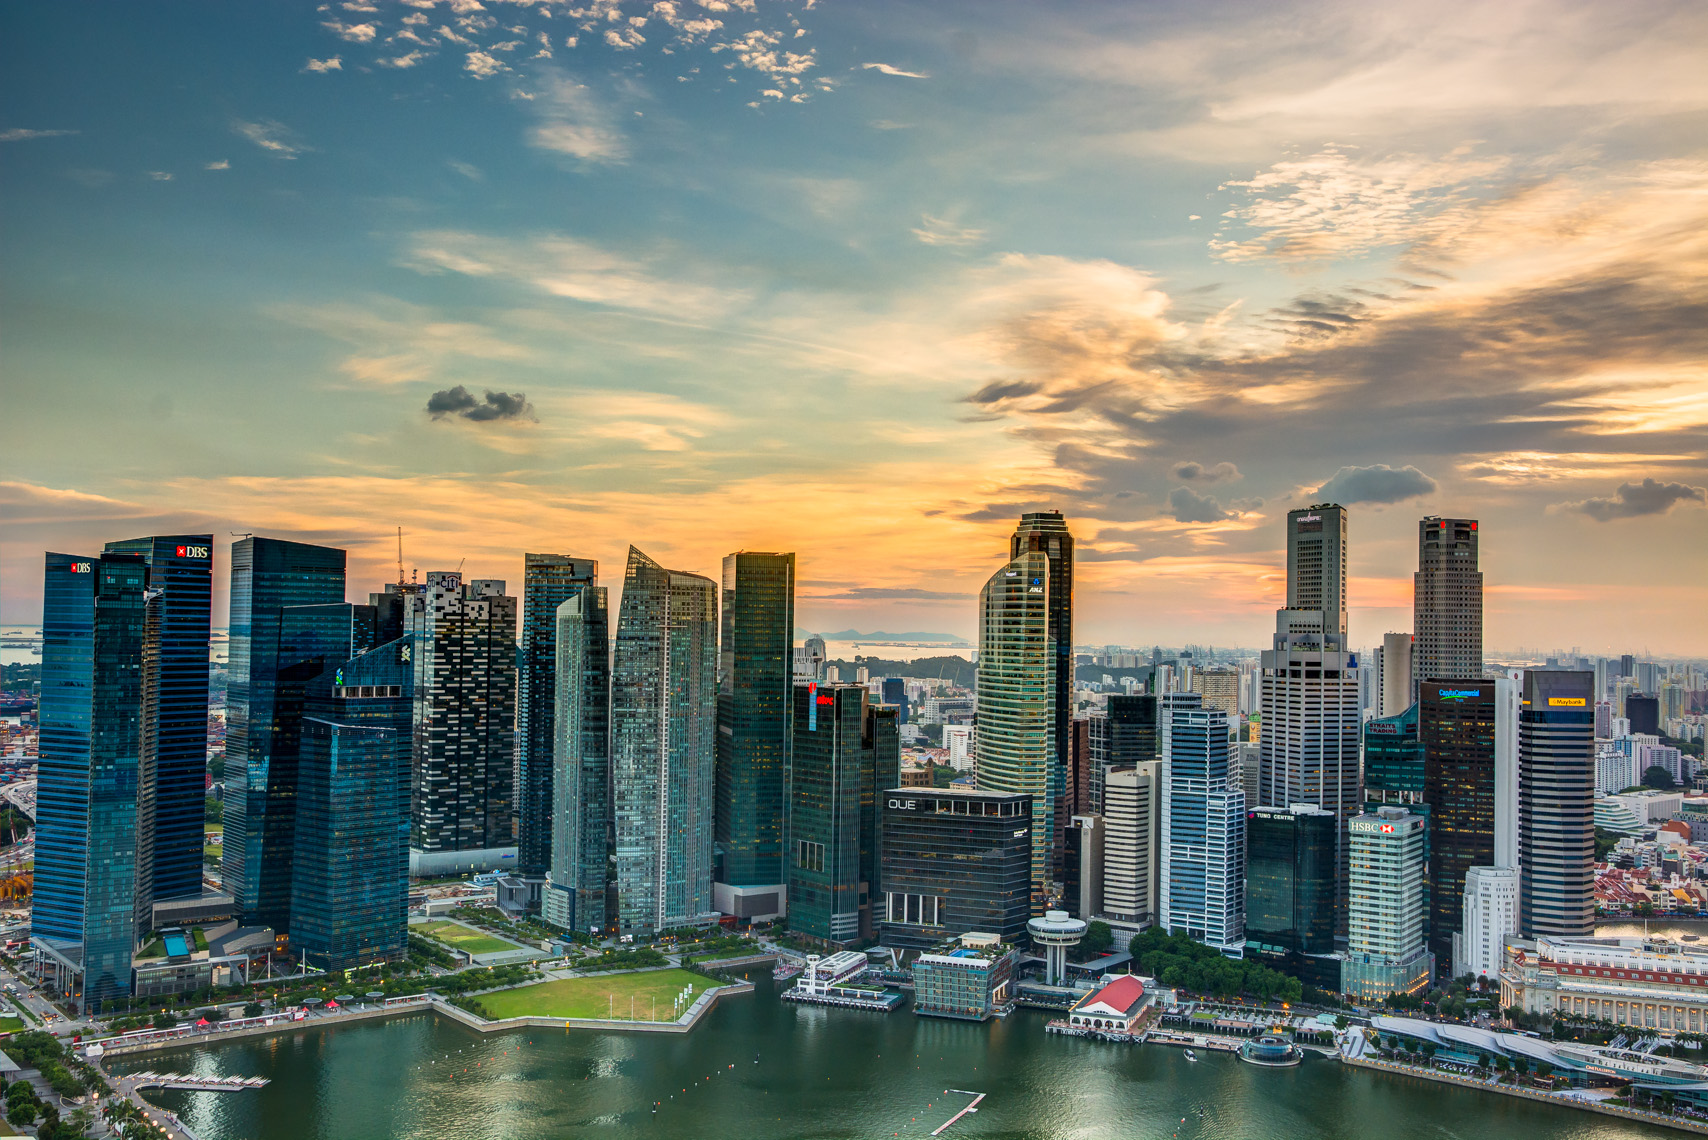 Singapore Skyline at Sunset